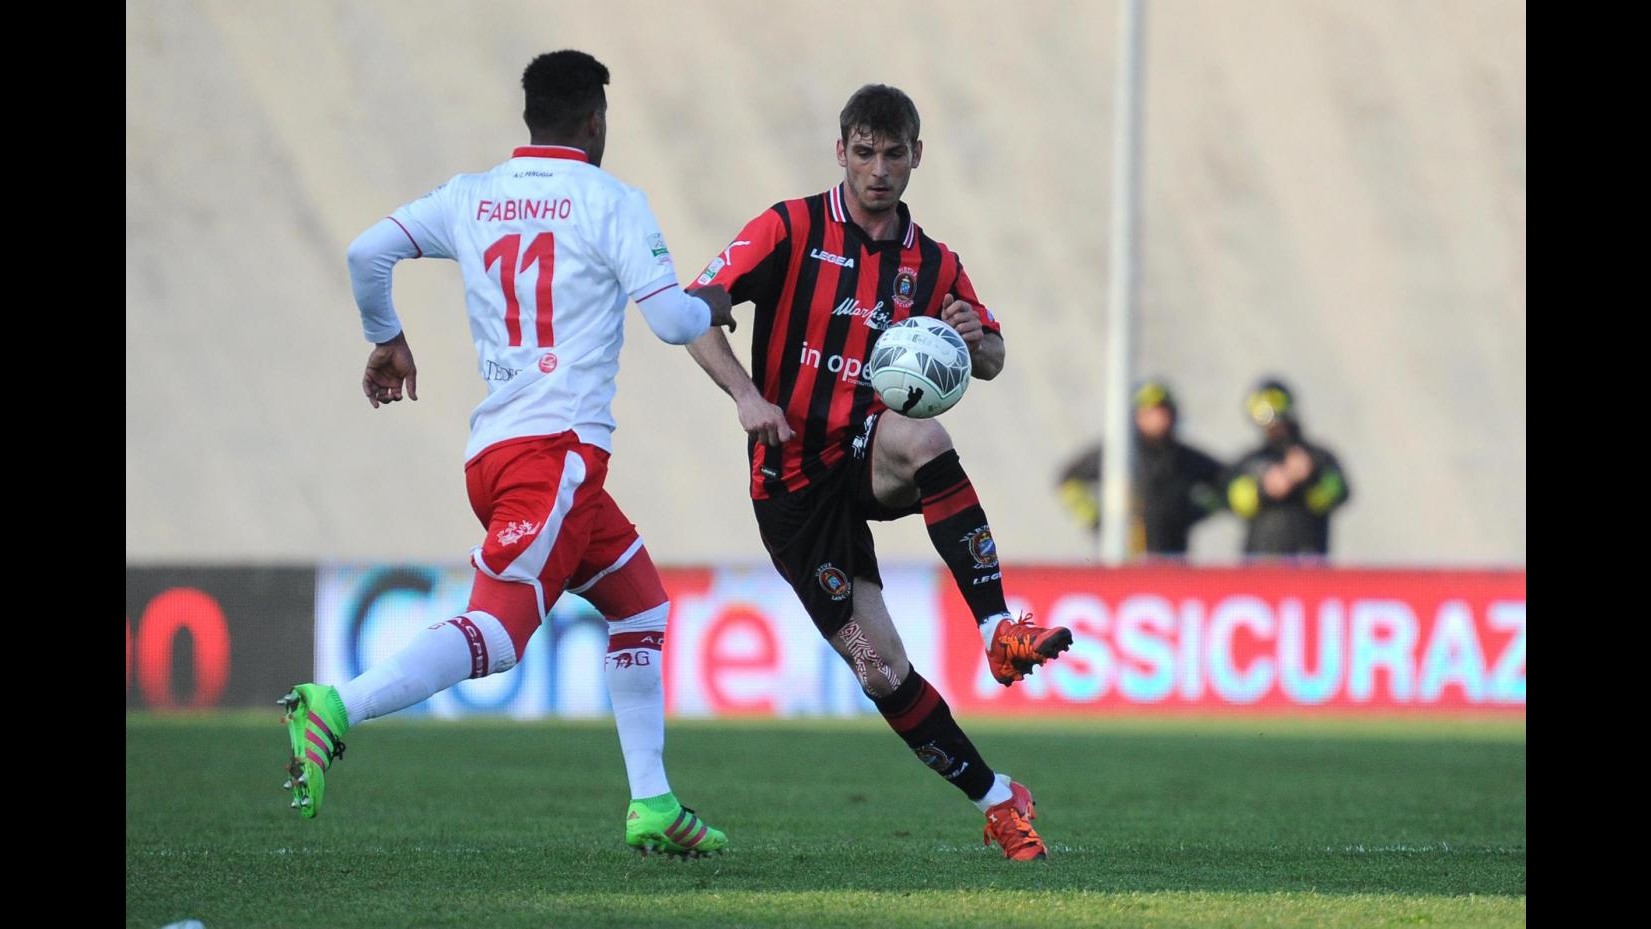 FOTO Virtus Lanciano perde in casa col Perugia 0-1